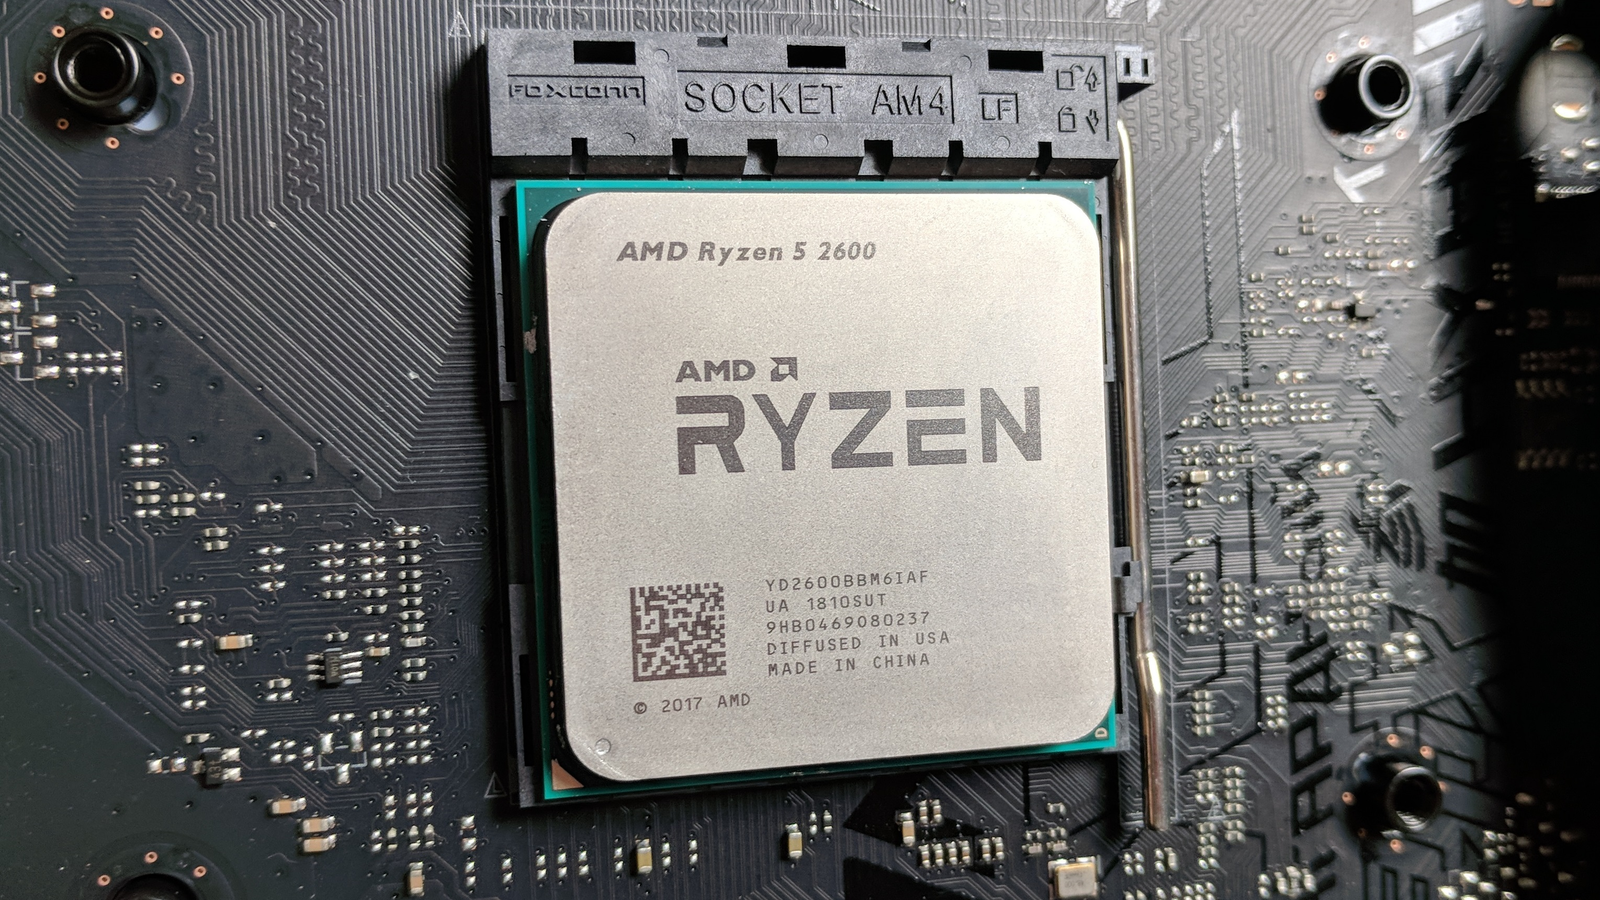 Amd radeon r5 процессоры. AMD Ryzen 5 2600. Процессор AMD Ryzen 5 2600x. Процессор AMD Ryzen 5 2600 am4. Ryzen 5 2500.